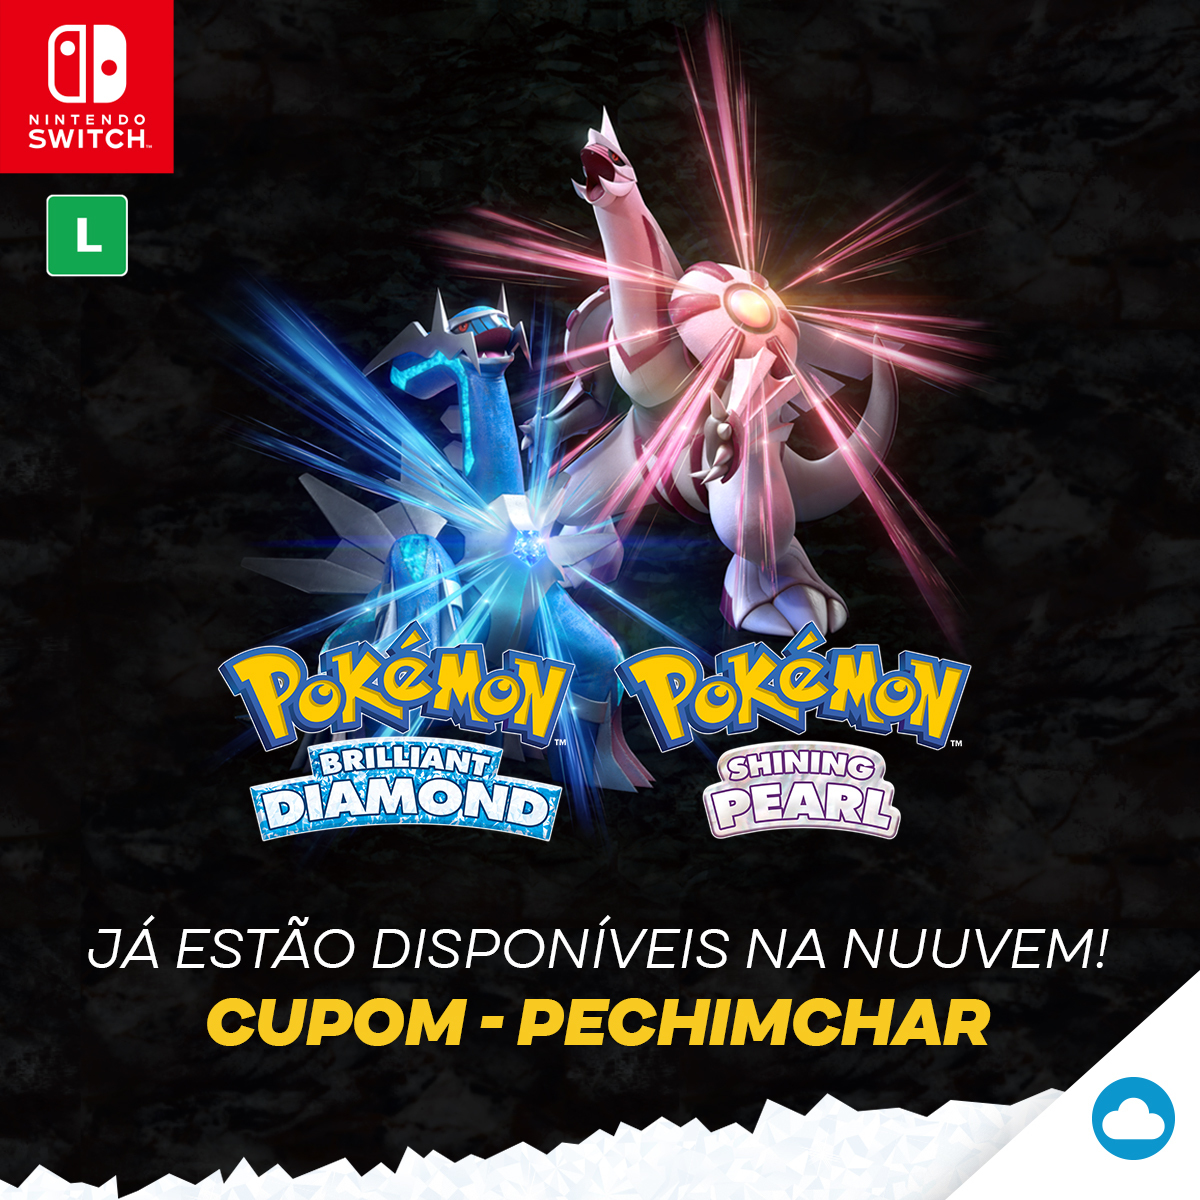 Pokémon Brilliant Diamond e Pokémon Shining Pearl, Como jogar, Website  oficial